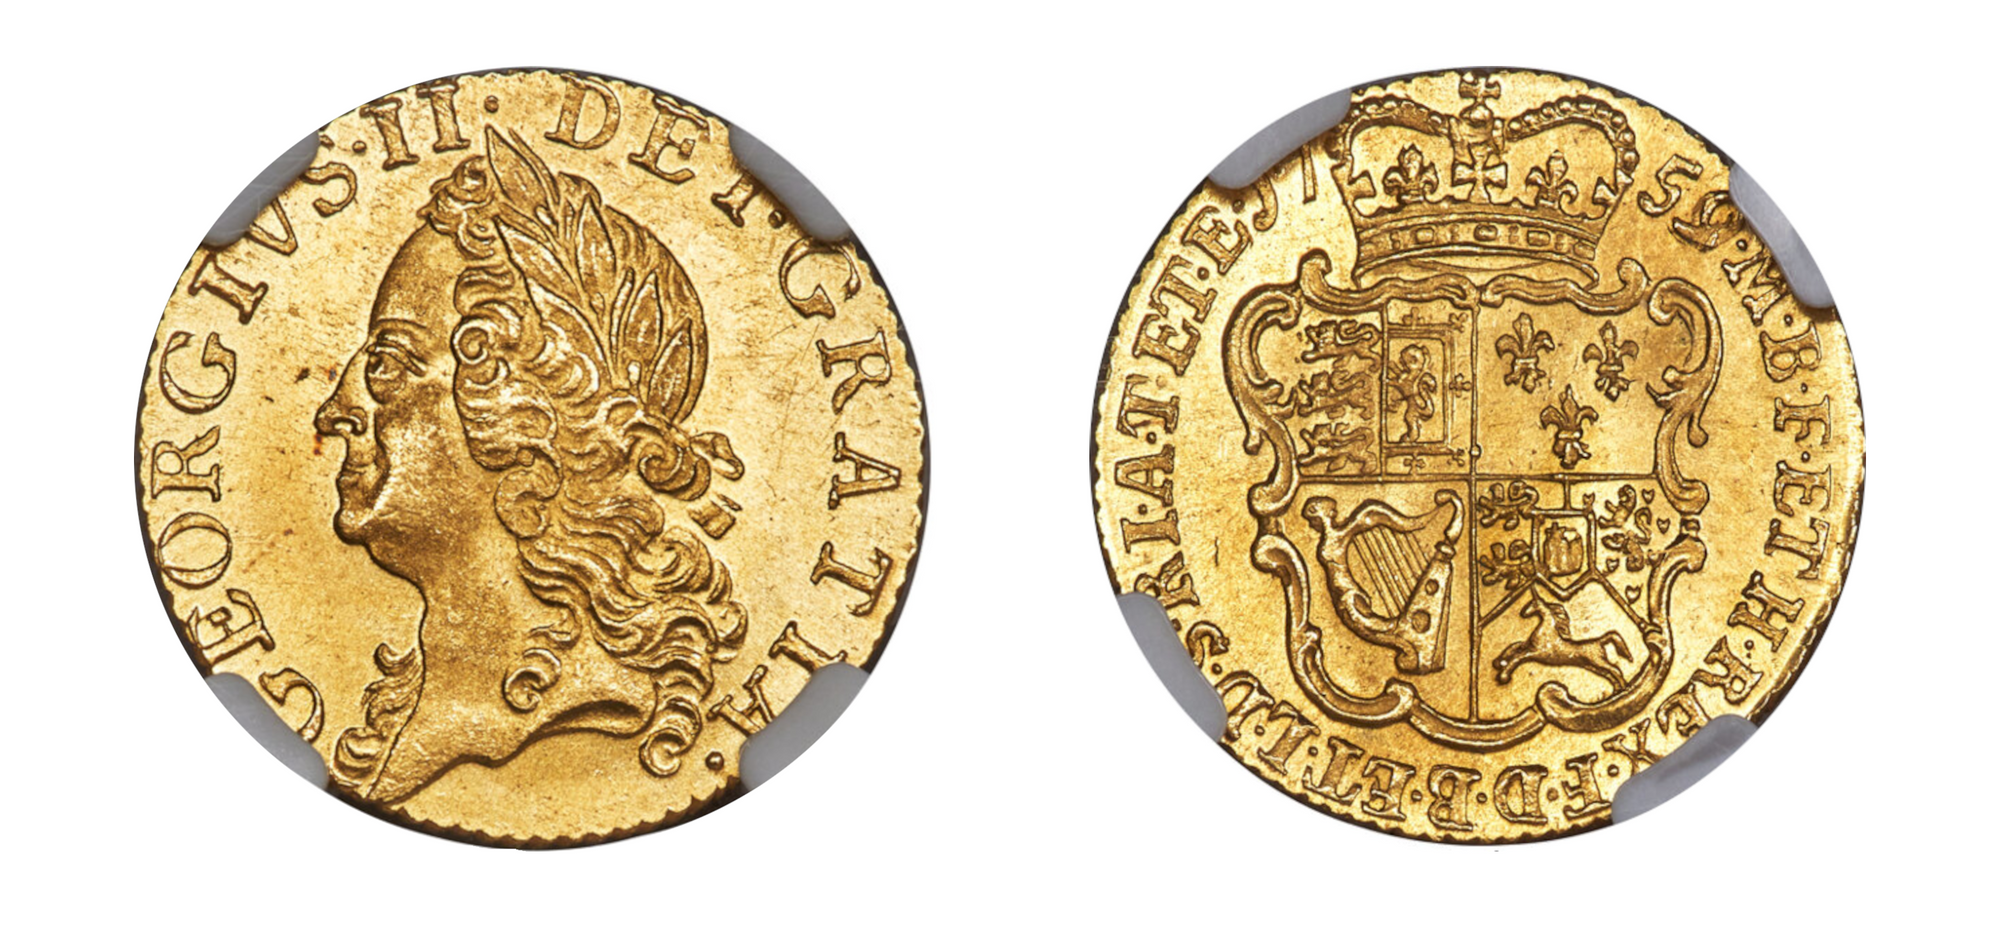 George II gold 1/2 Guinea 1759 MS65 NGC, KM587, S-3685, EGC-660 - Hard Asset Management, Inc